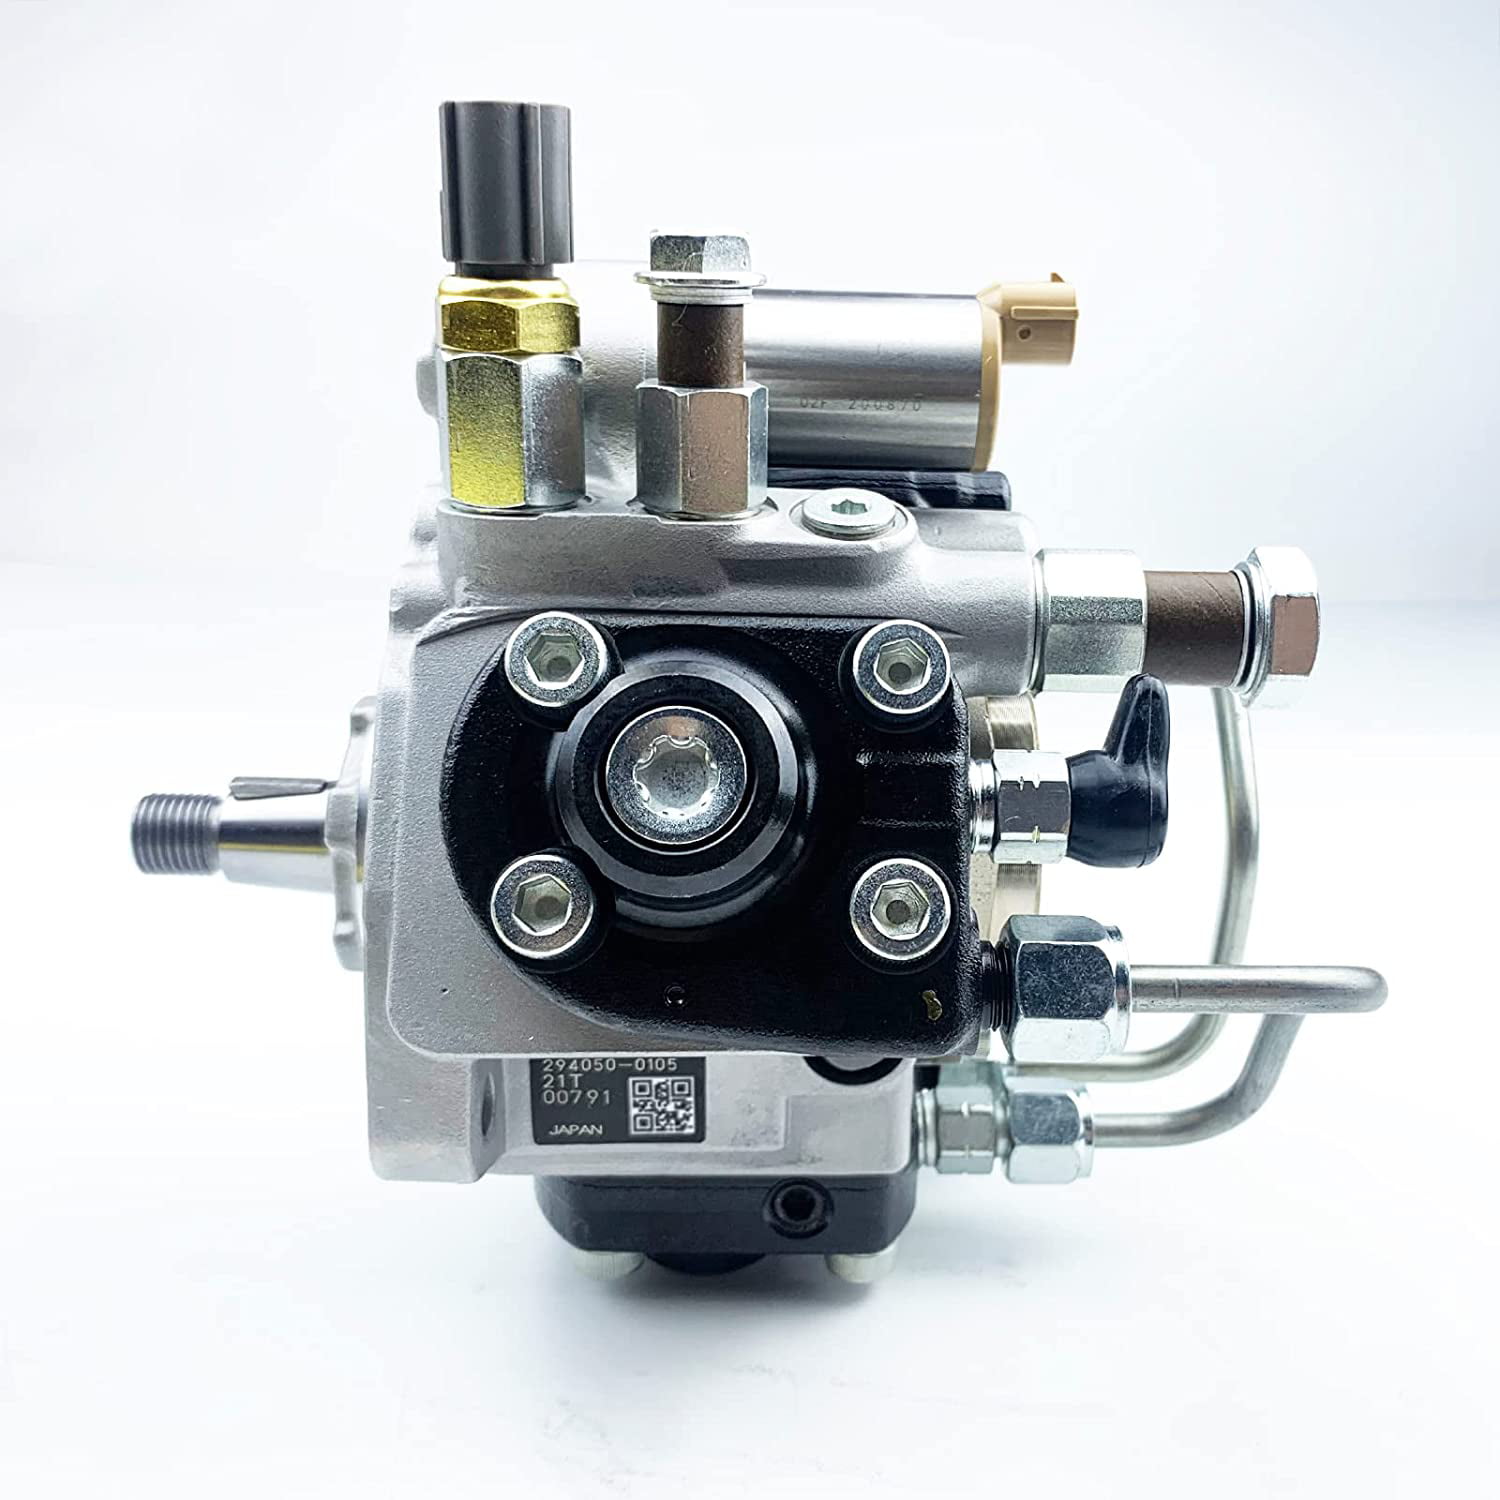 Seapple New Fuel Injector pump 294050-0100 8-98091565-0 Compatible with  Isuzu 7.8L N-Series F-Series 6HK1 Denso Diesel